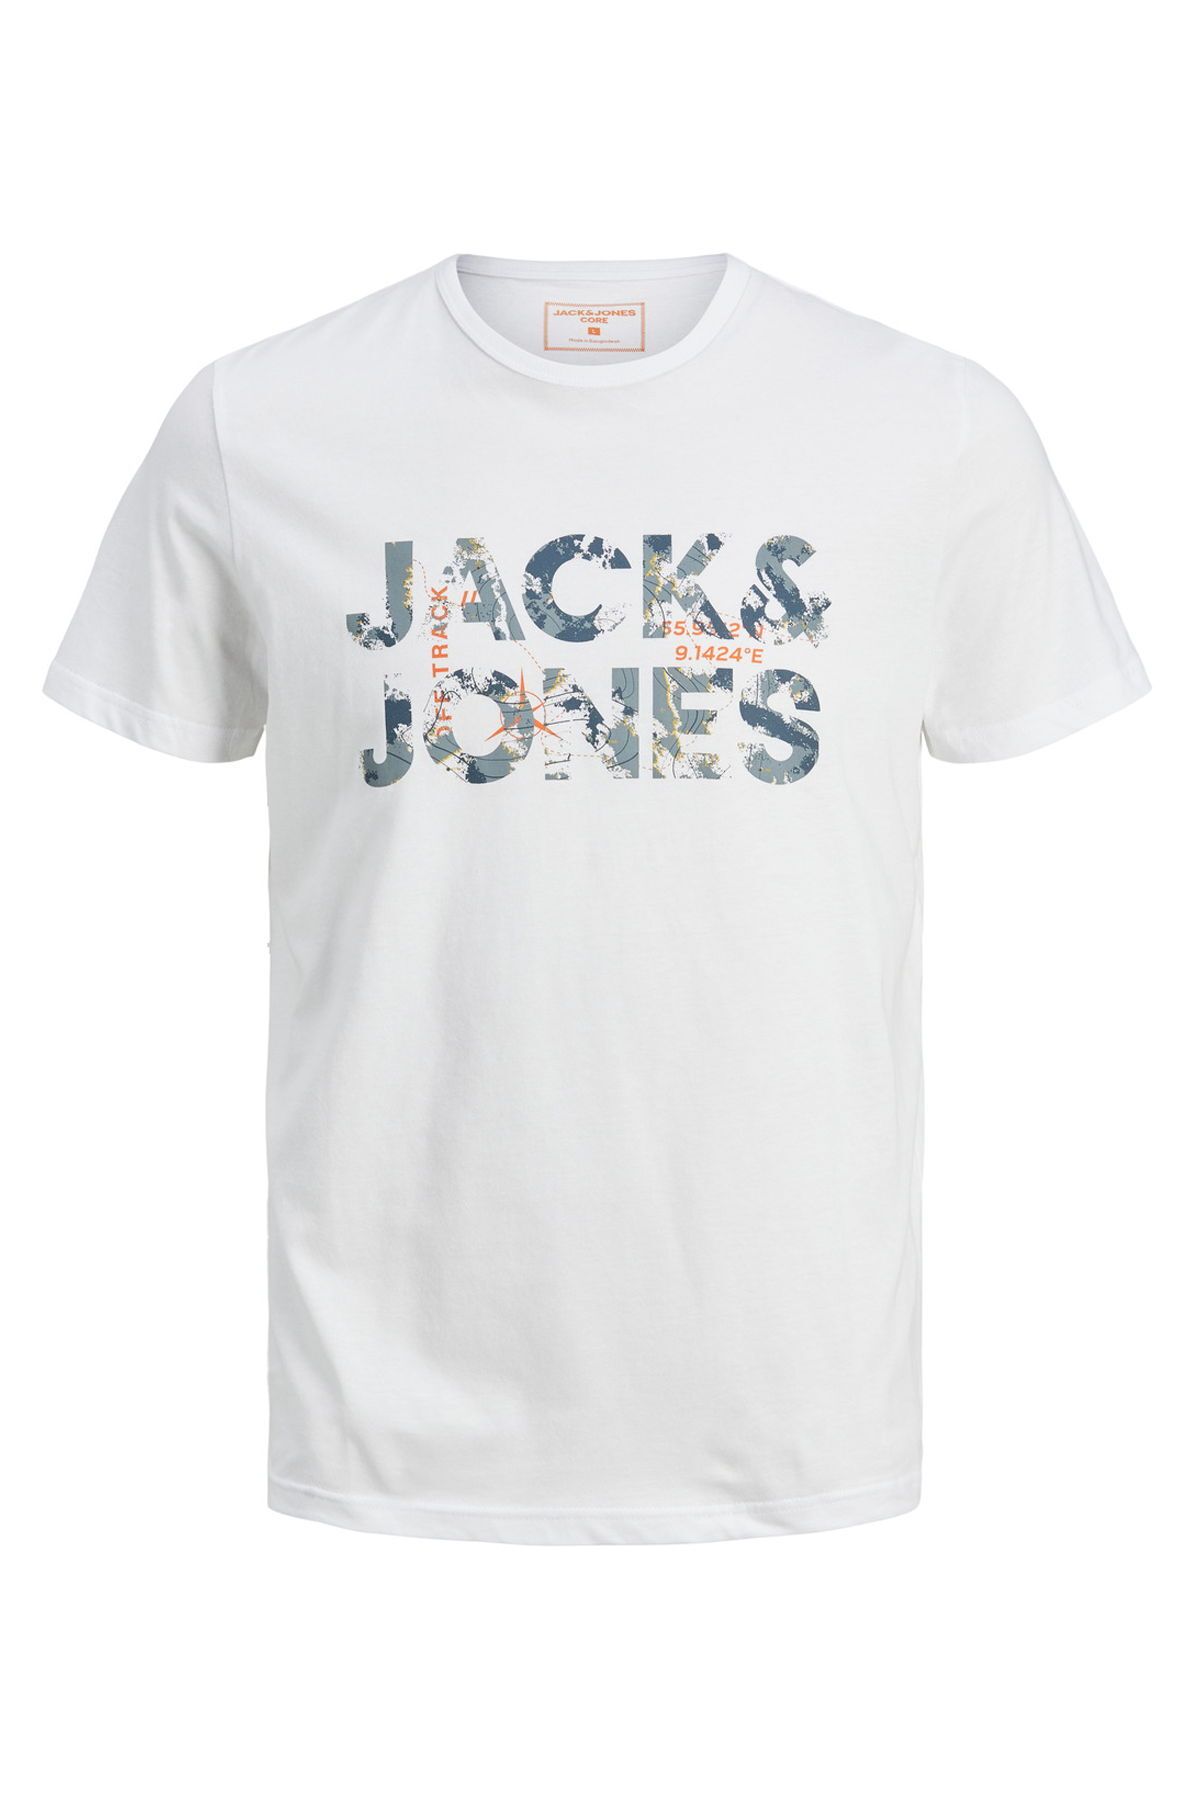 Jack & Jones Jack&jones 12215700 Logo Tee Ss Beyaz